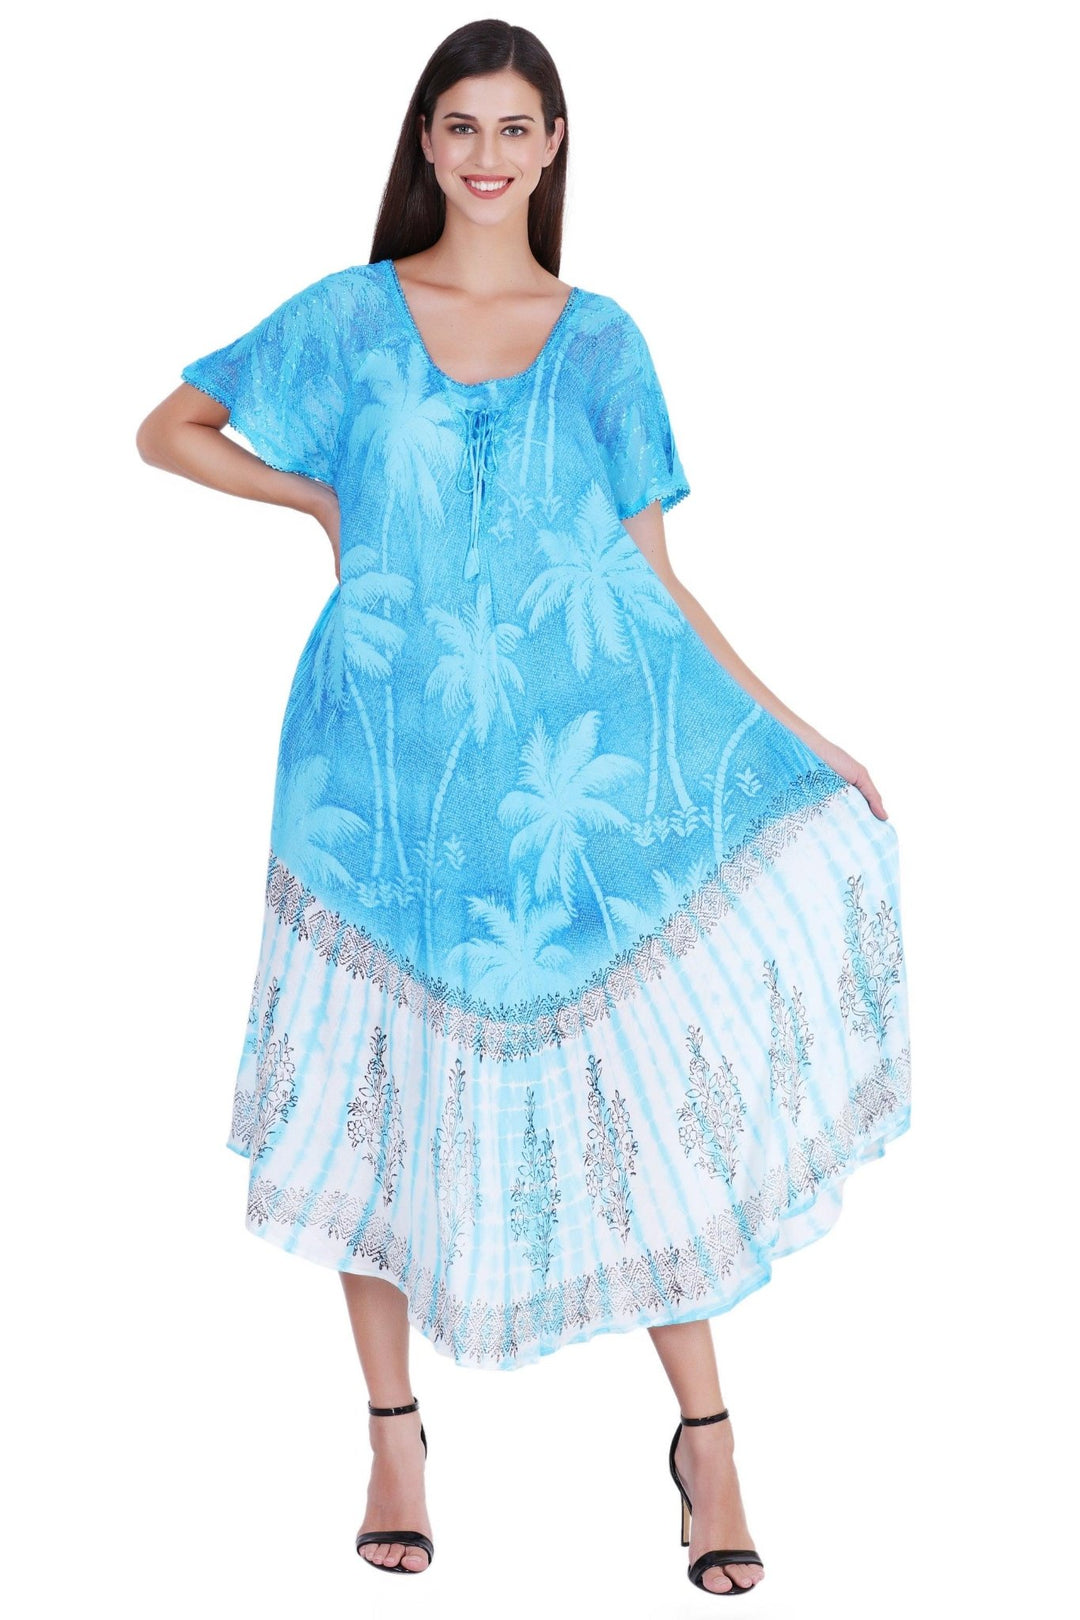 Palm Tree Block Print Tie Dye Dress 18603 - Advance Apparels Inc